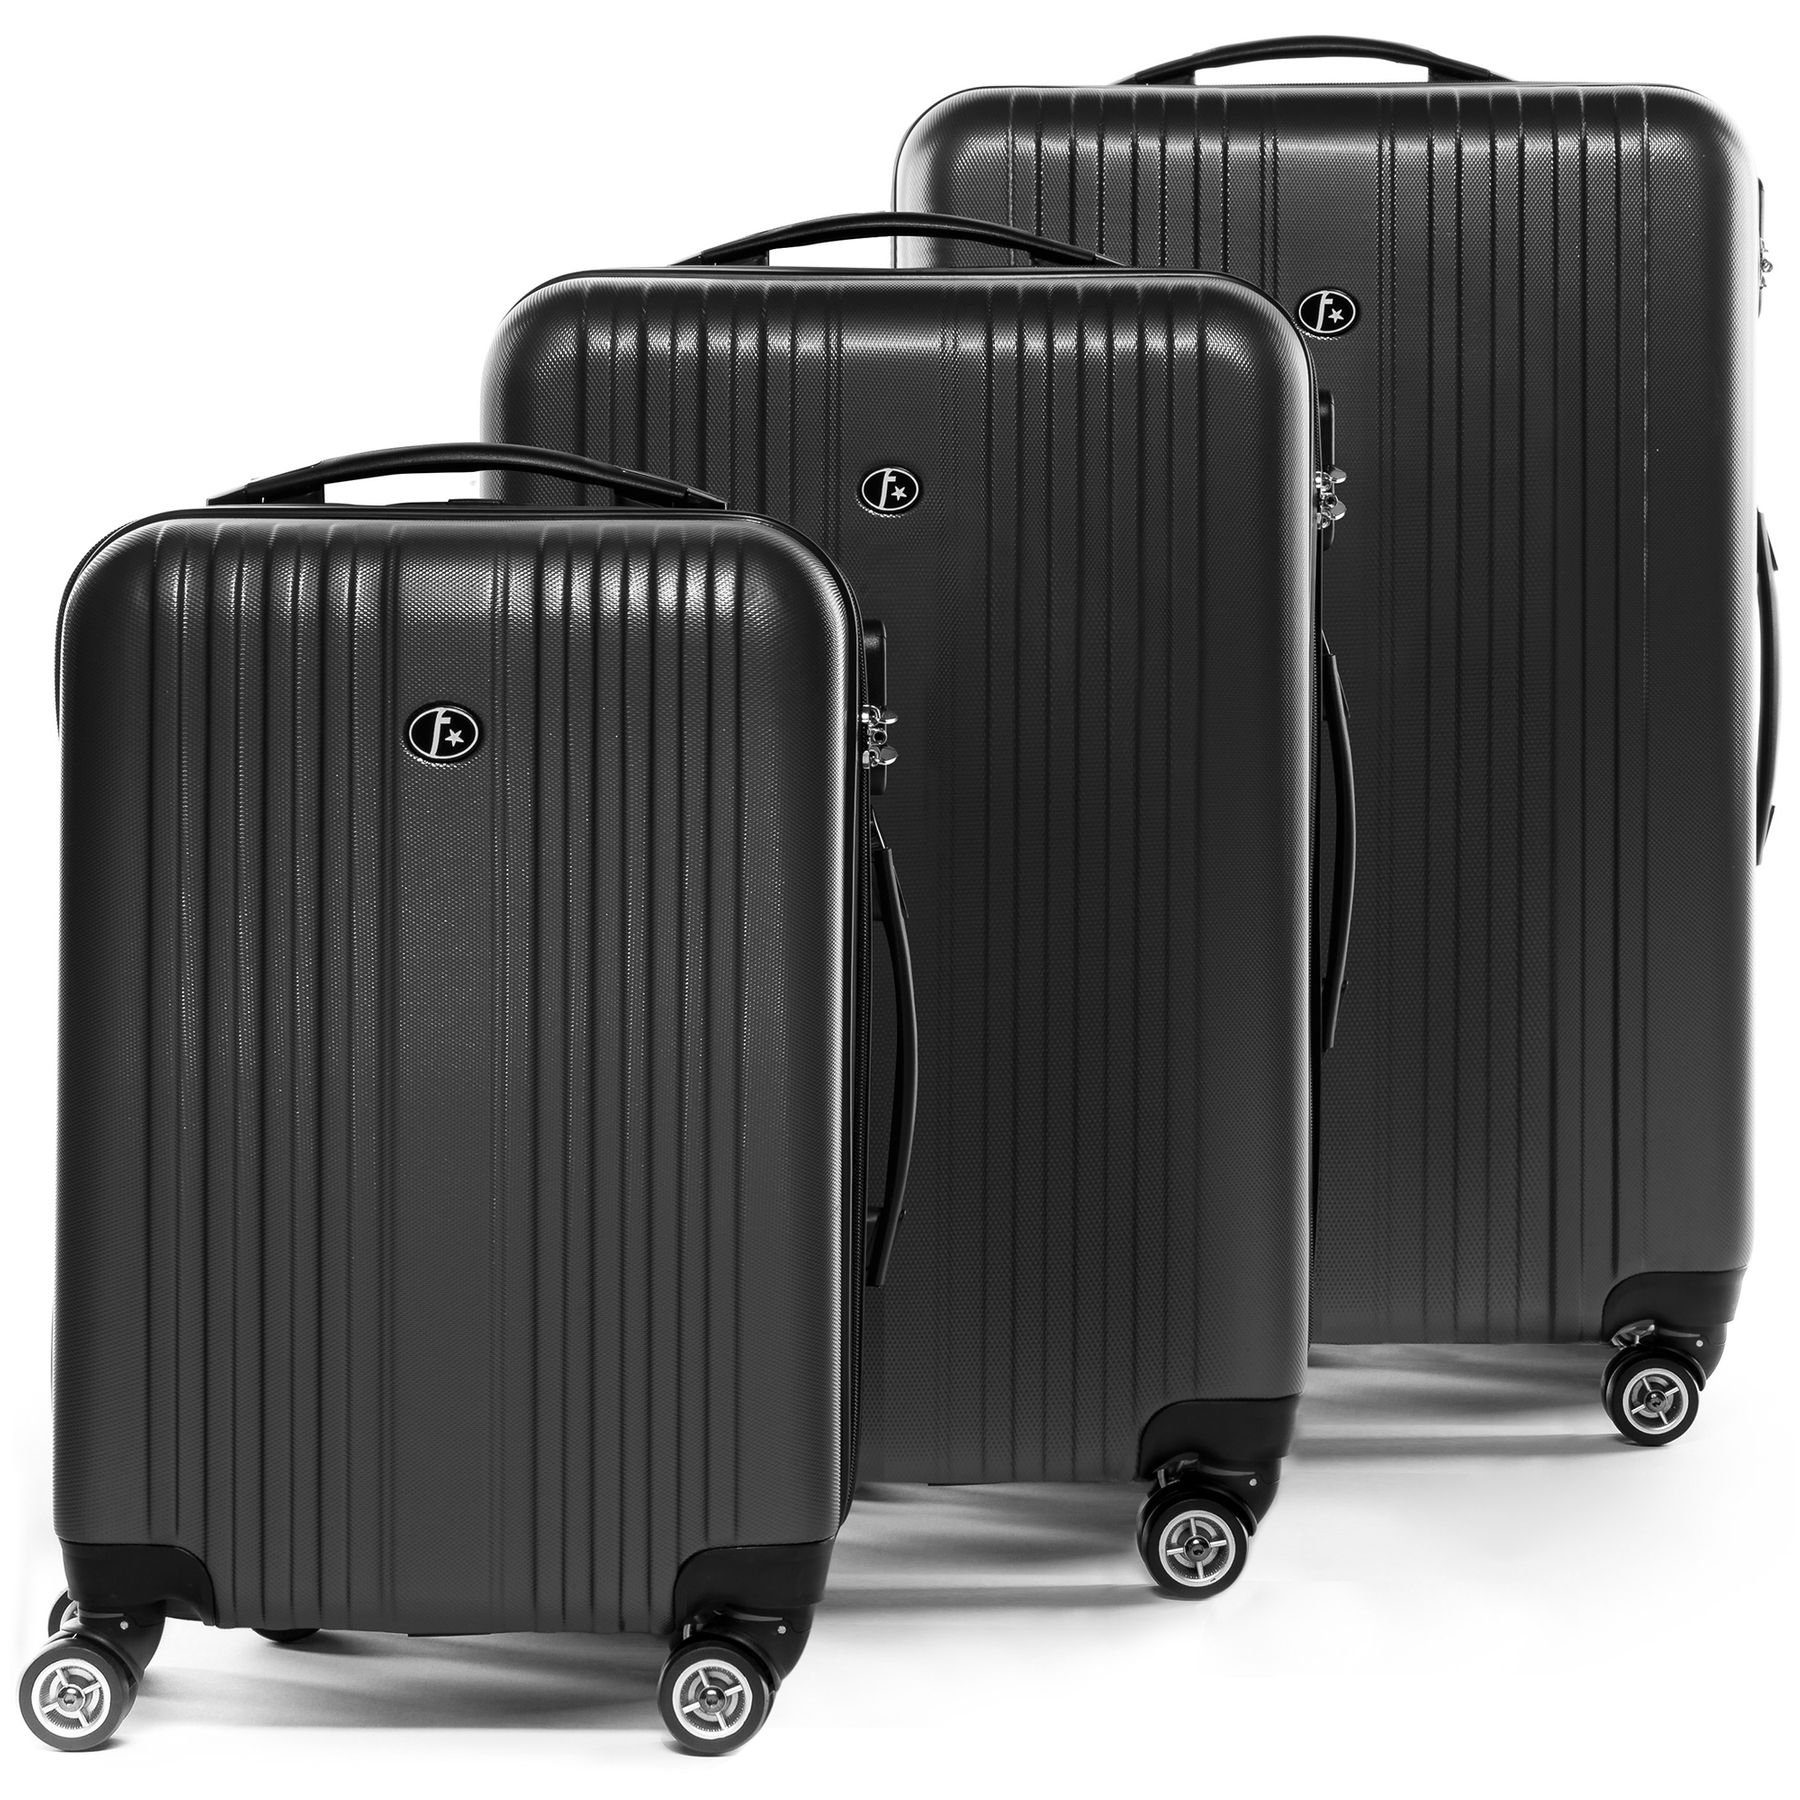 Trolley Koffer Kofferset Set, Hartschale teilig 3er Rollkoffer 3 Rollen, FERGÉ Reisekoffer Toulouse, 4 Premium